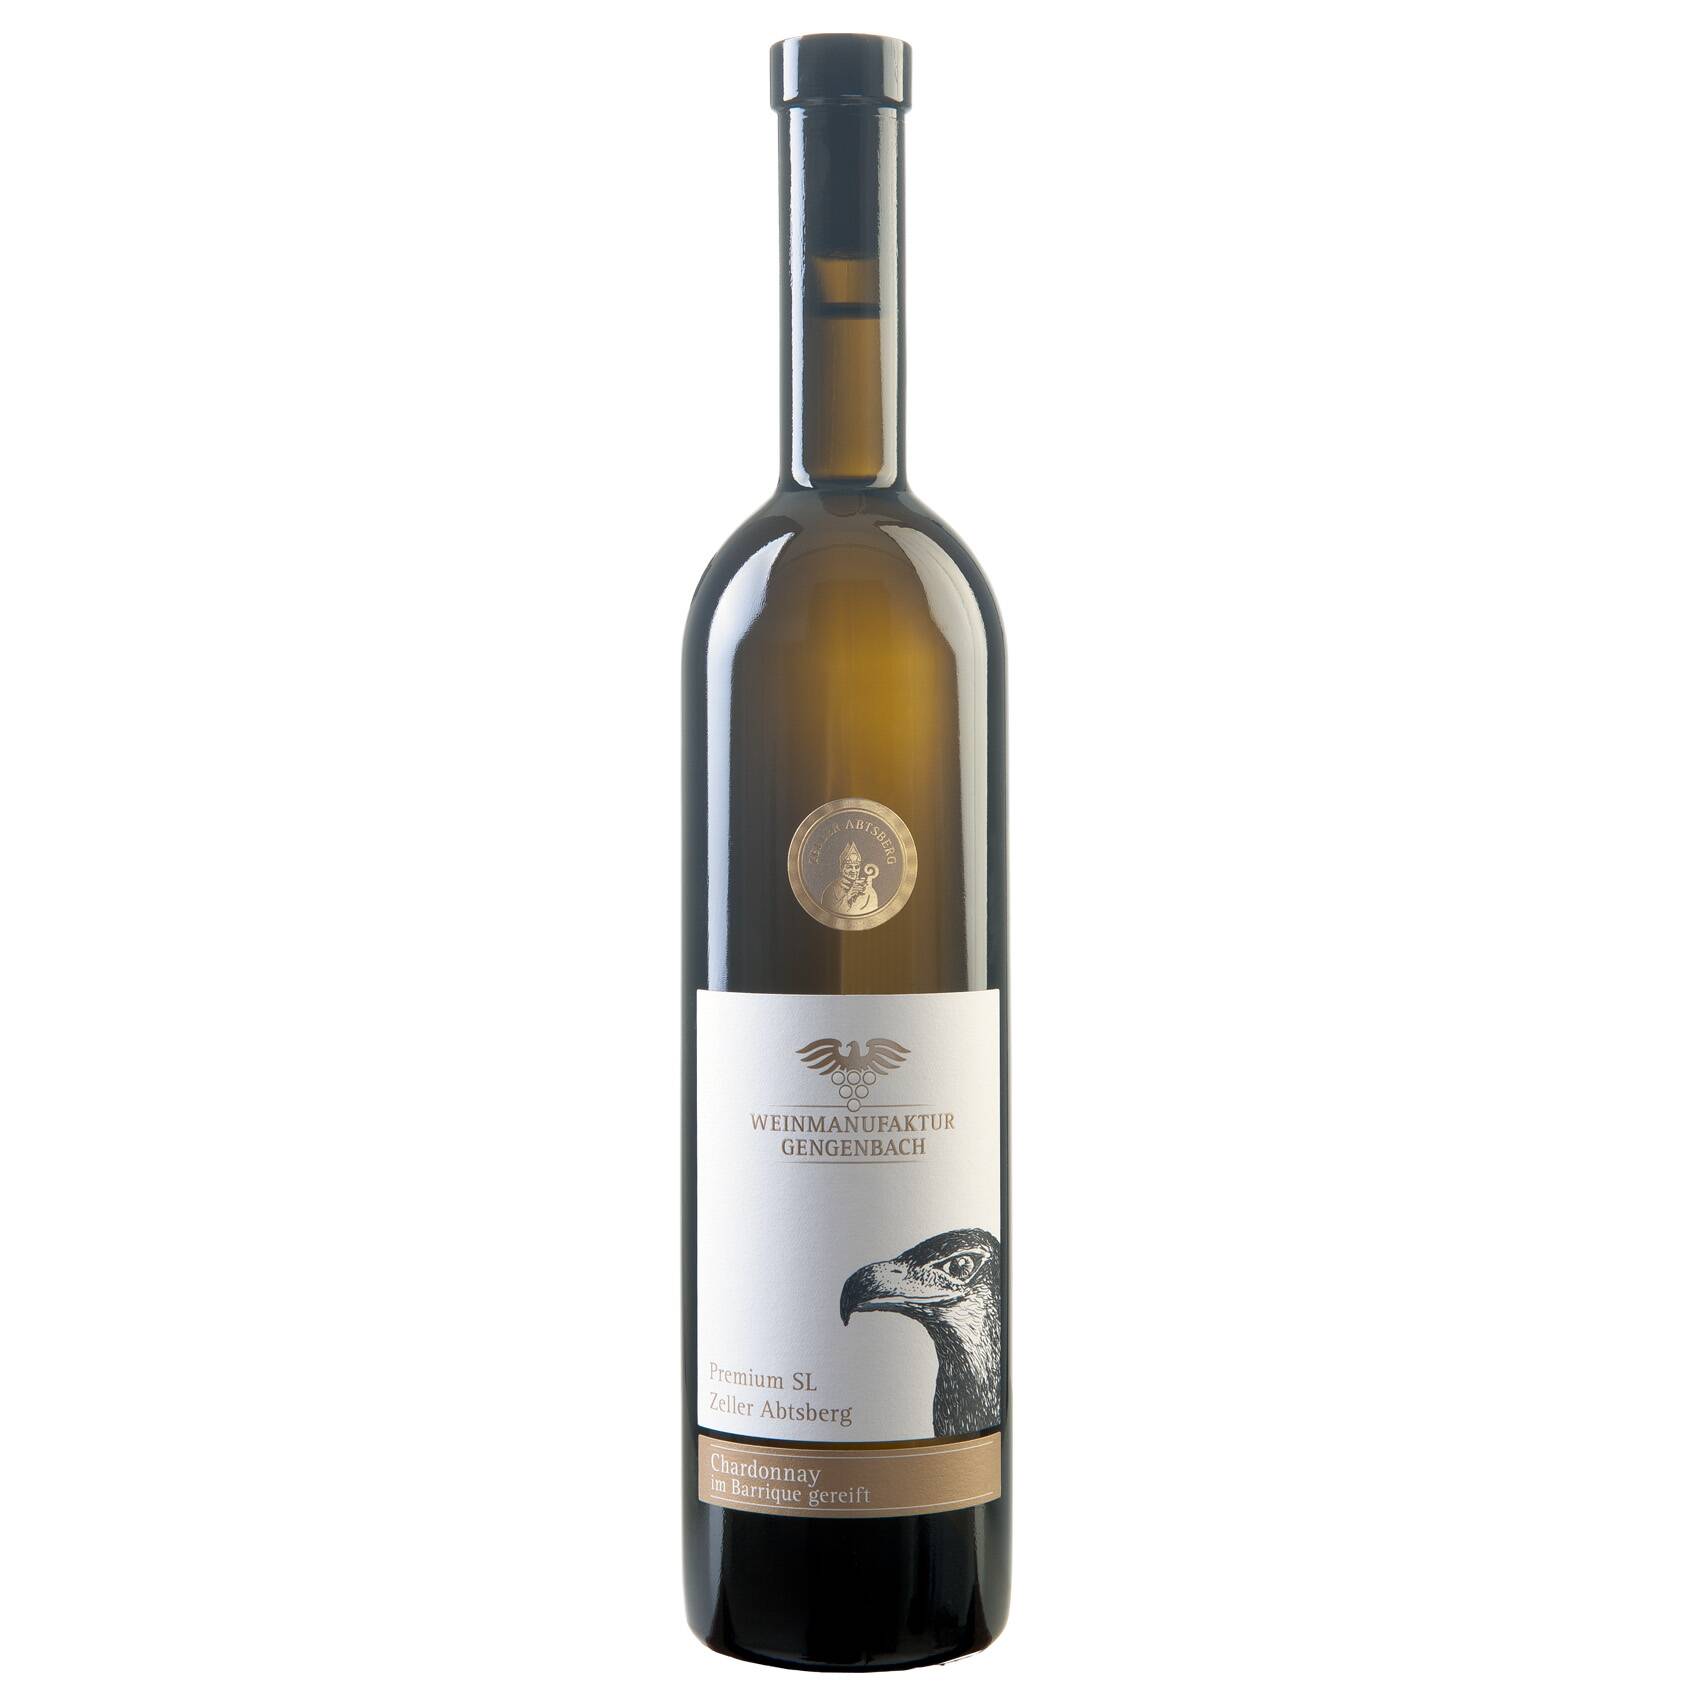 Premium Sl Zeller Abtsberg Chardonnay Barrique trocken 0,75L